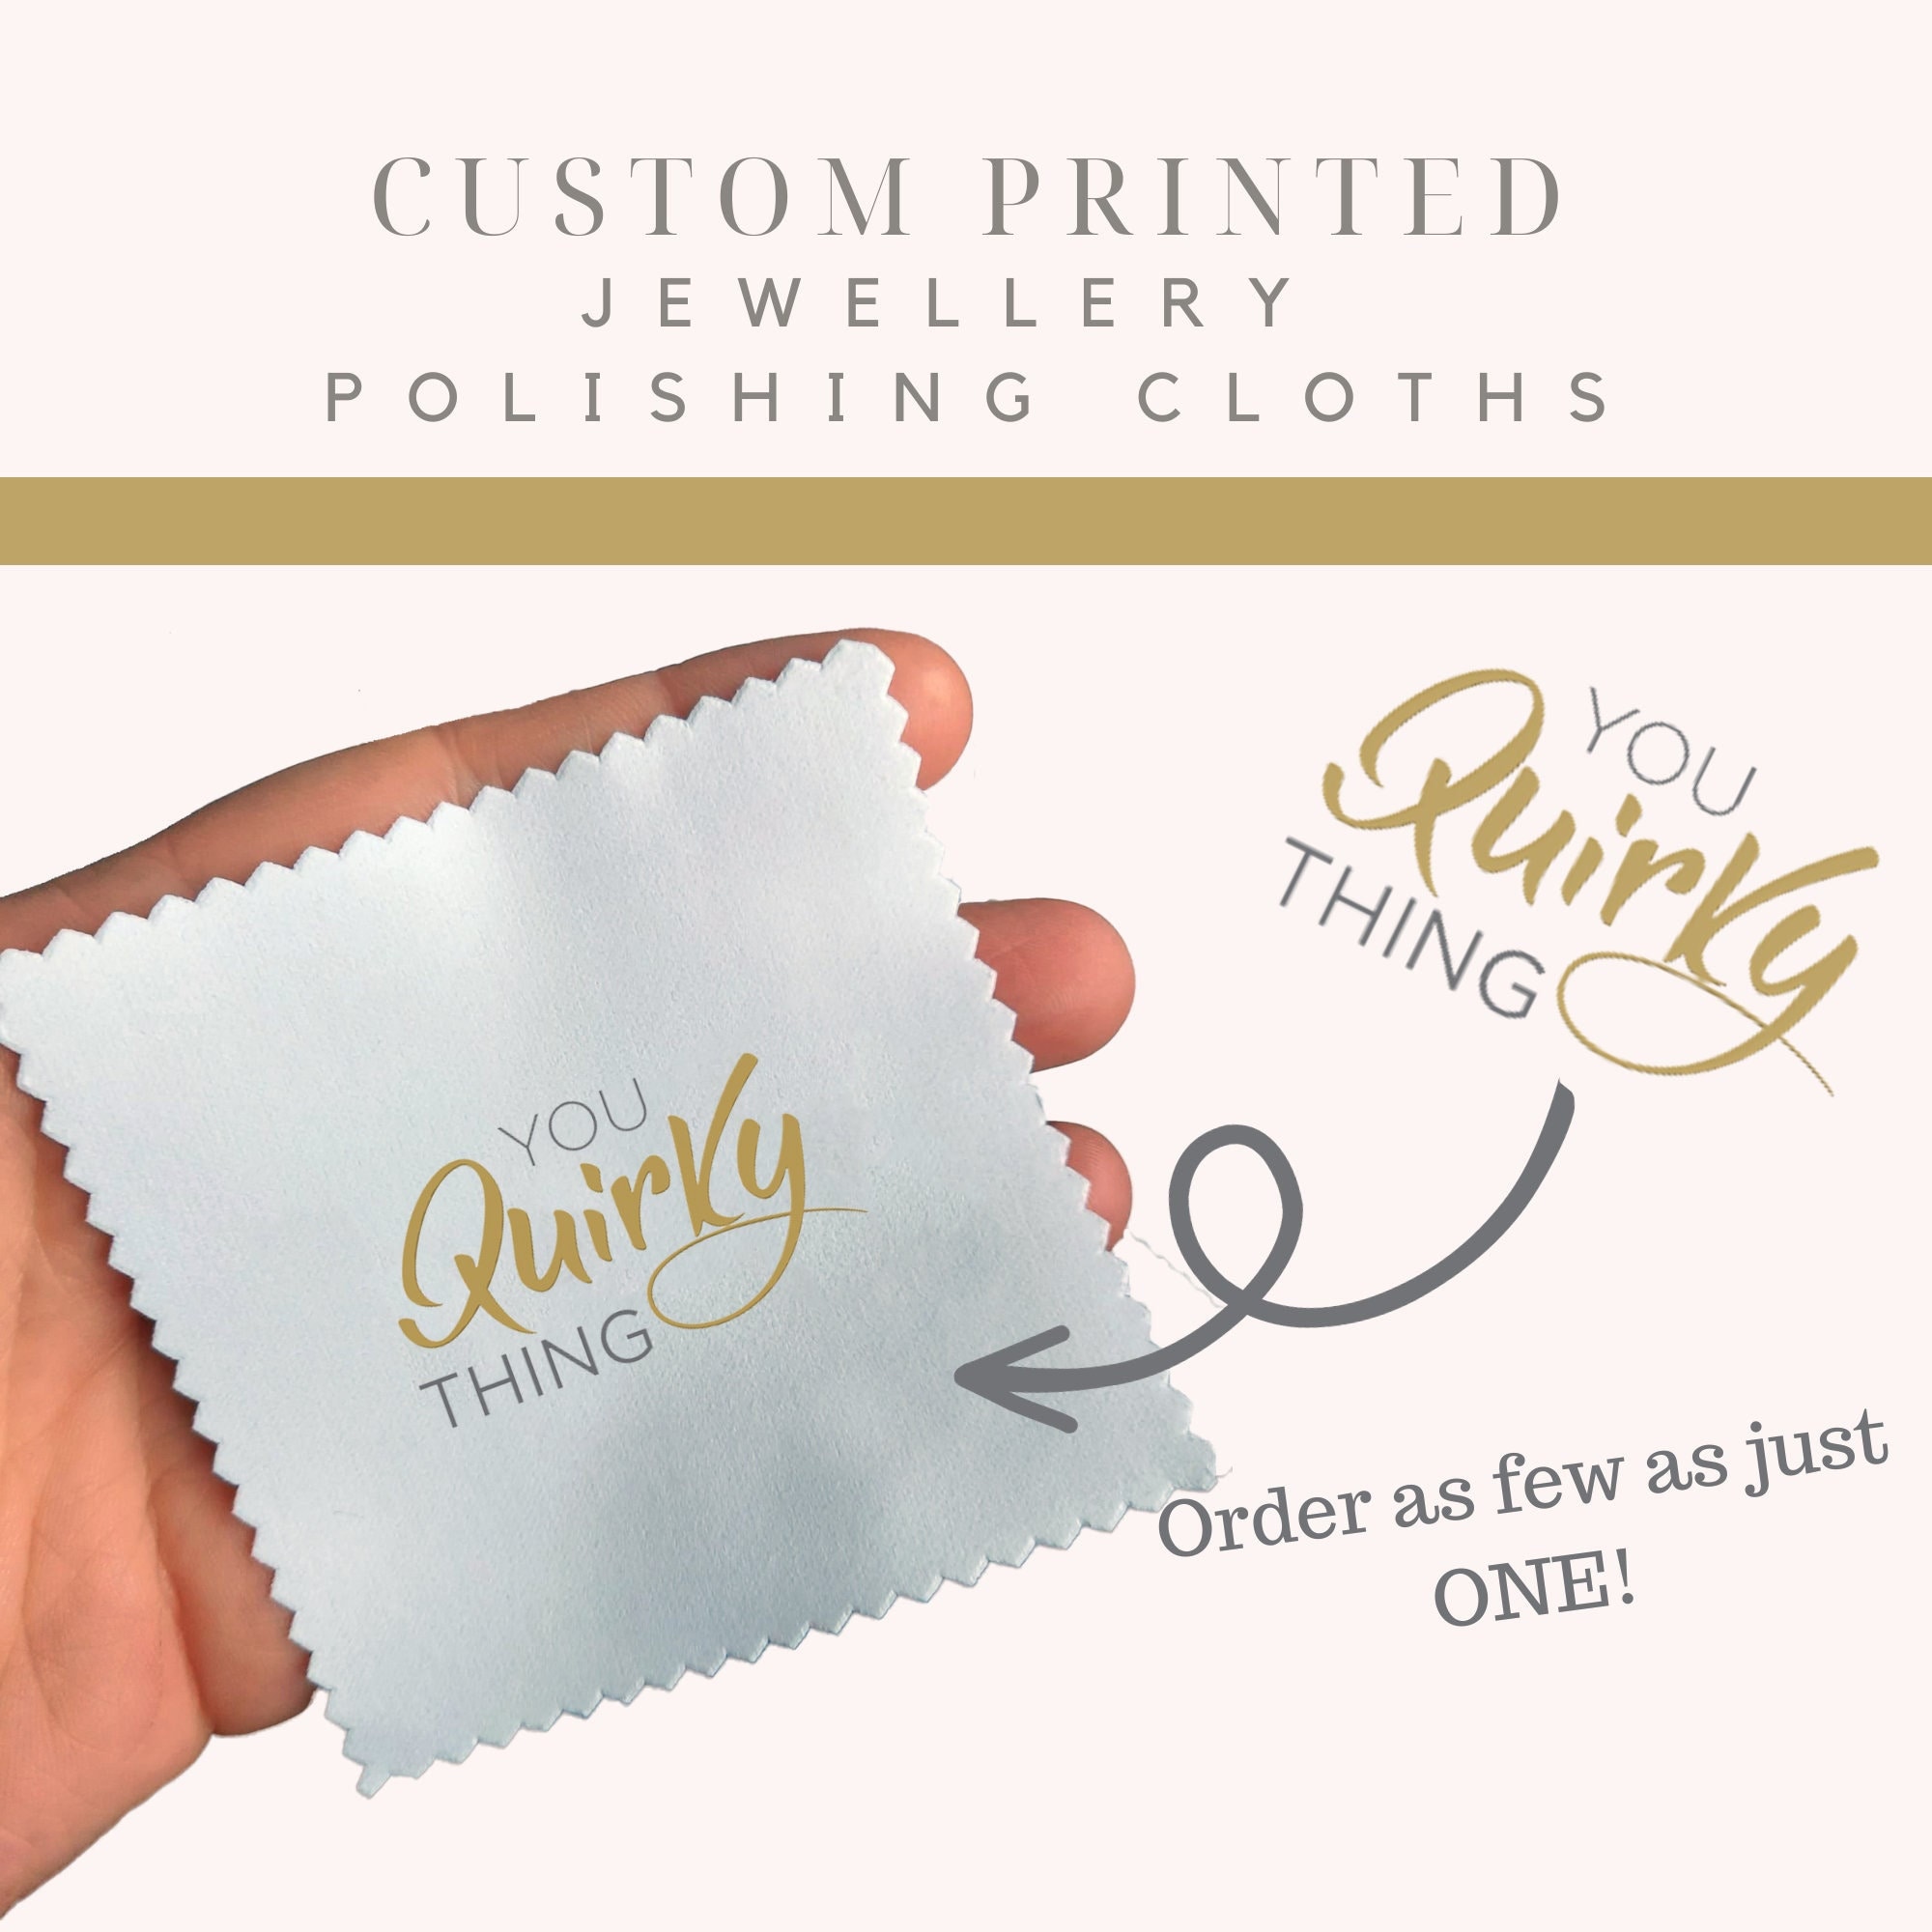 Custom Polishing Cloths for Jewellery. Branded Cloth for 